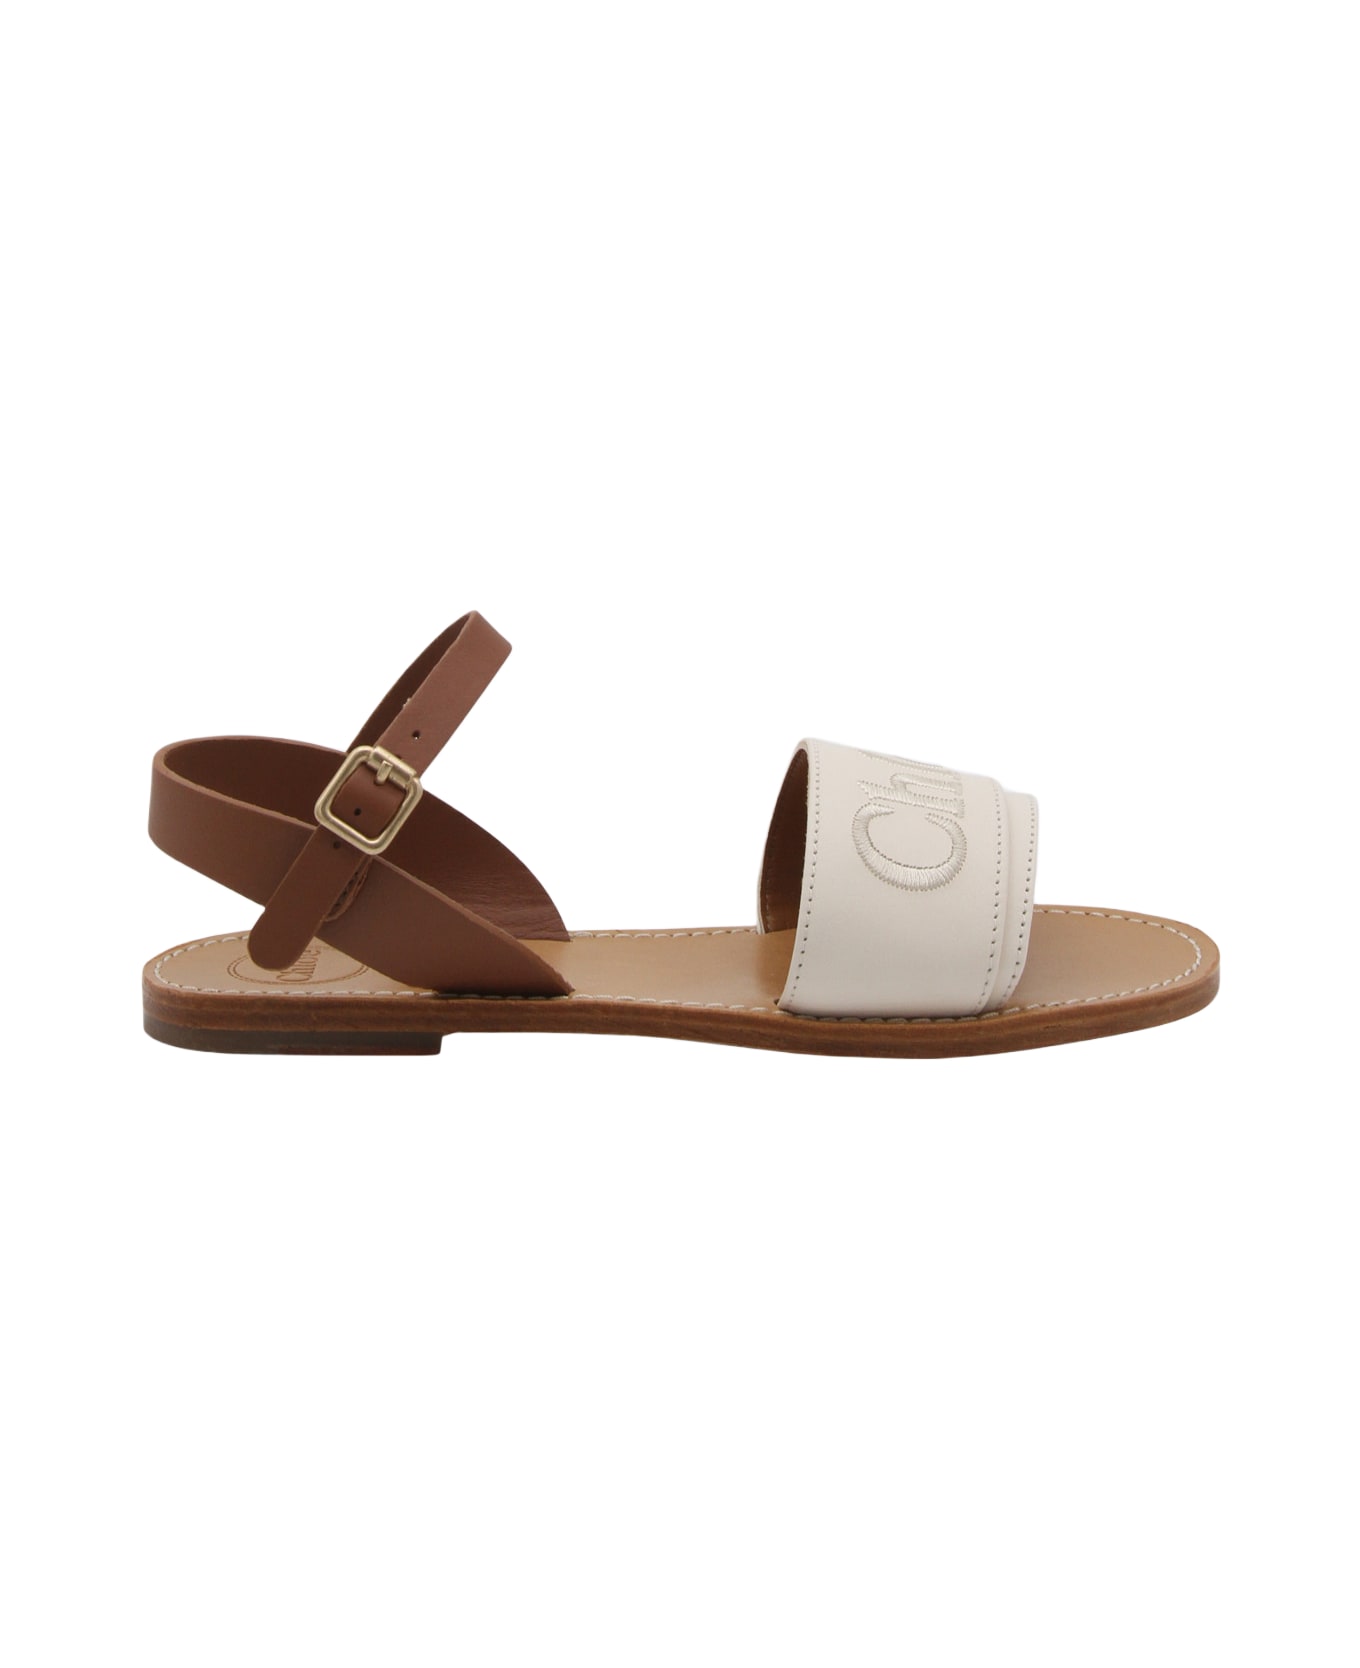 Chloé Avorio Leather Sandals - Ivory